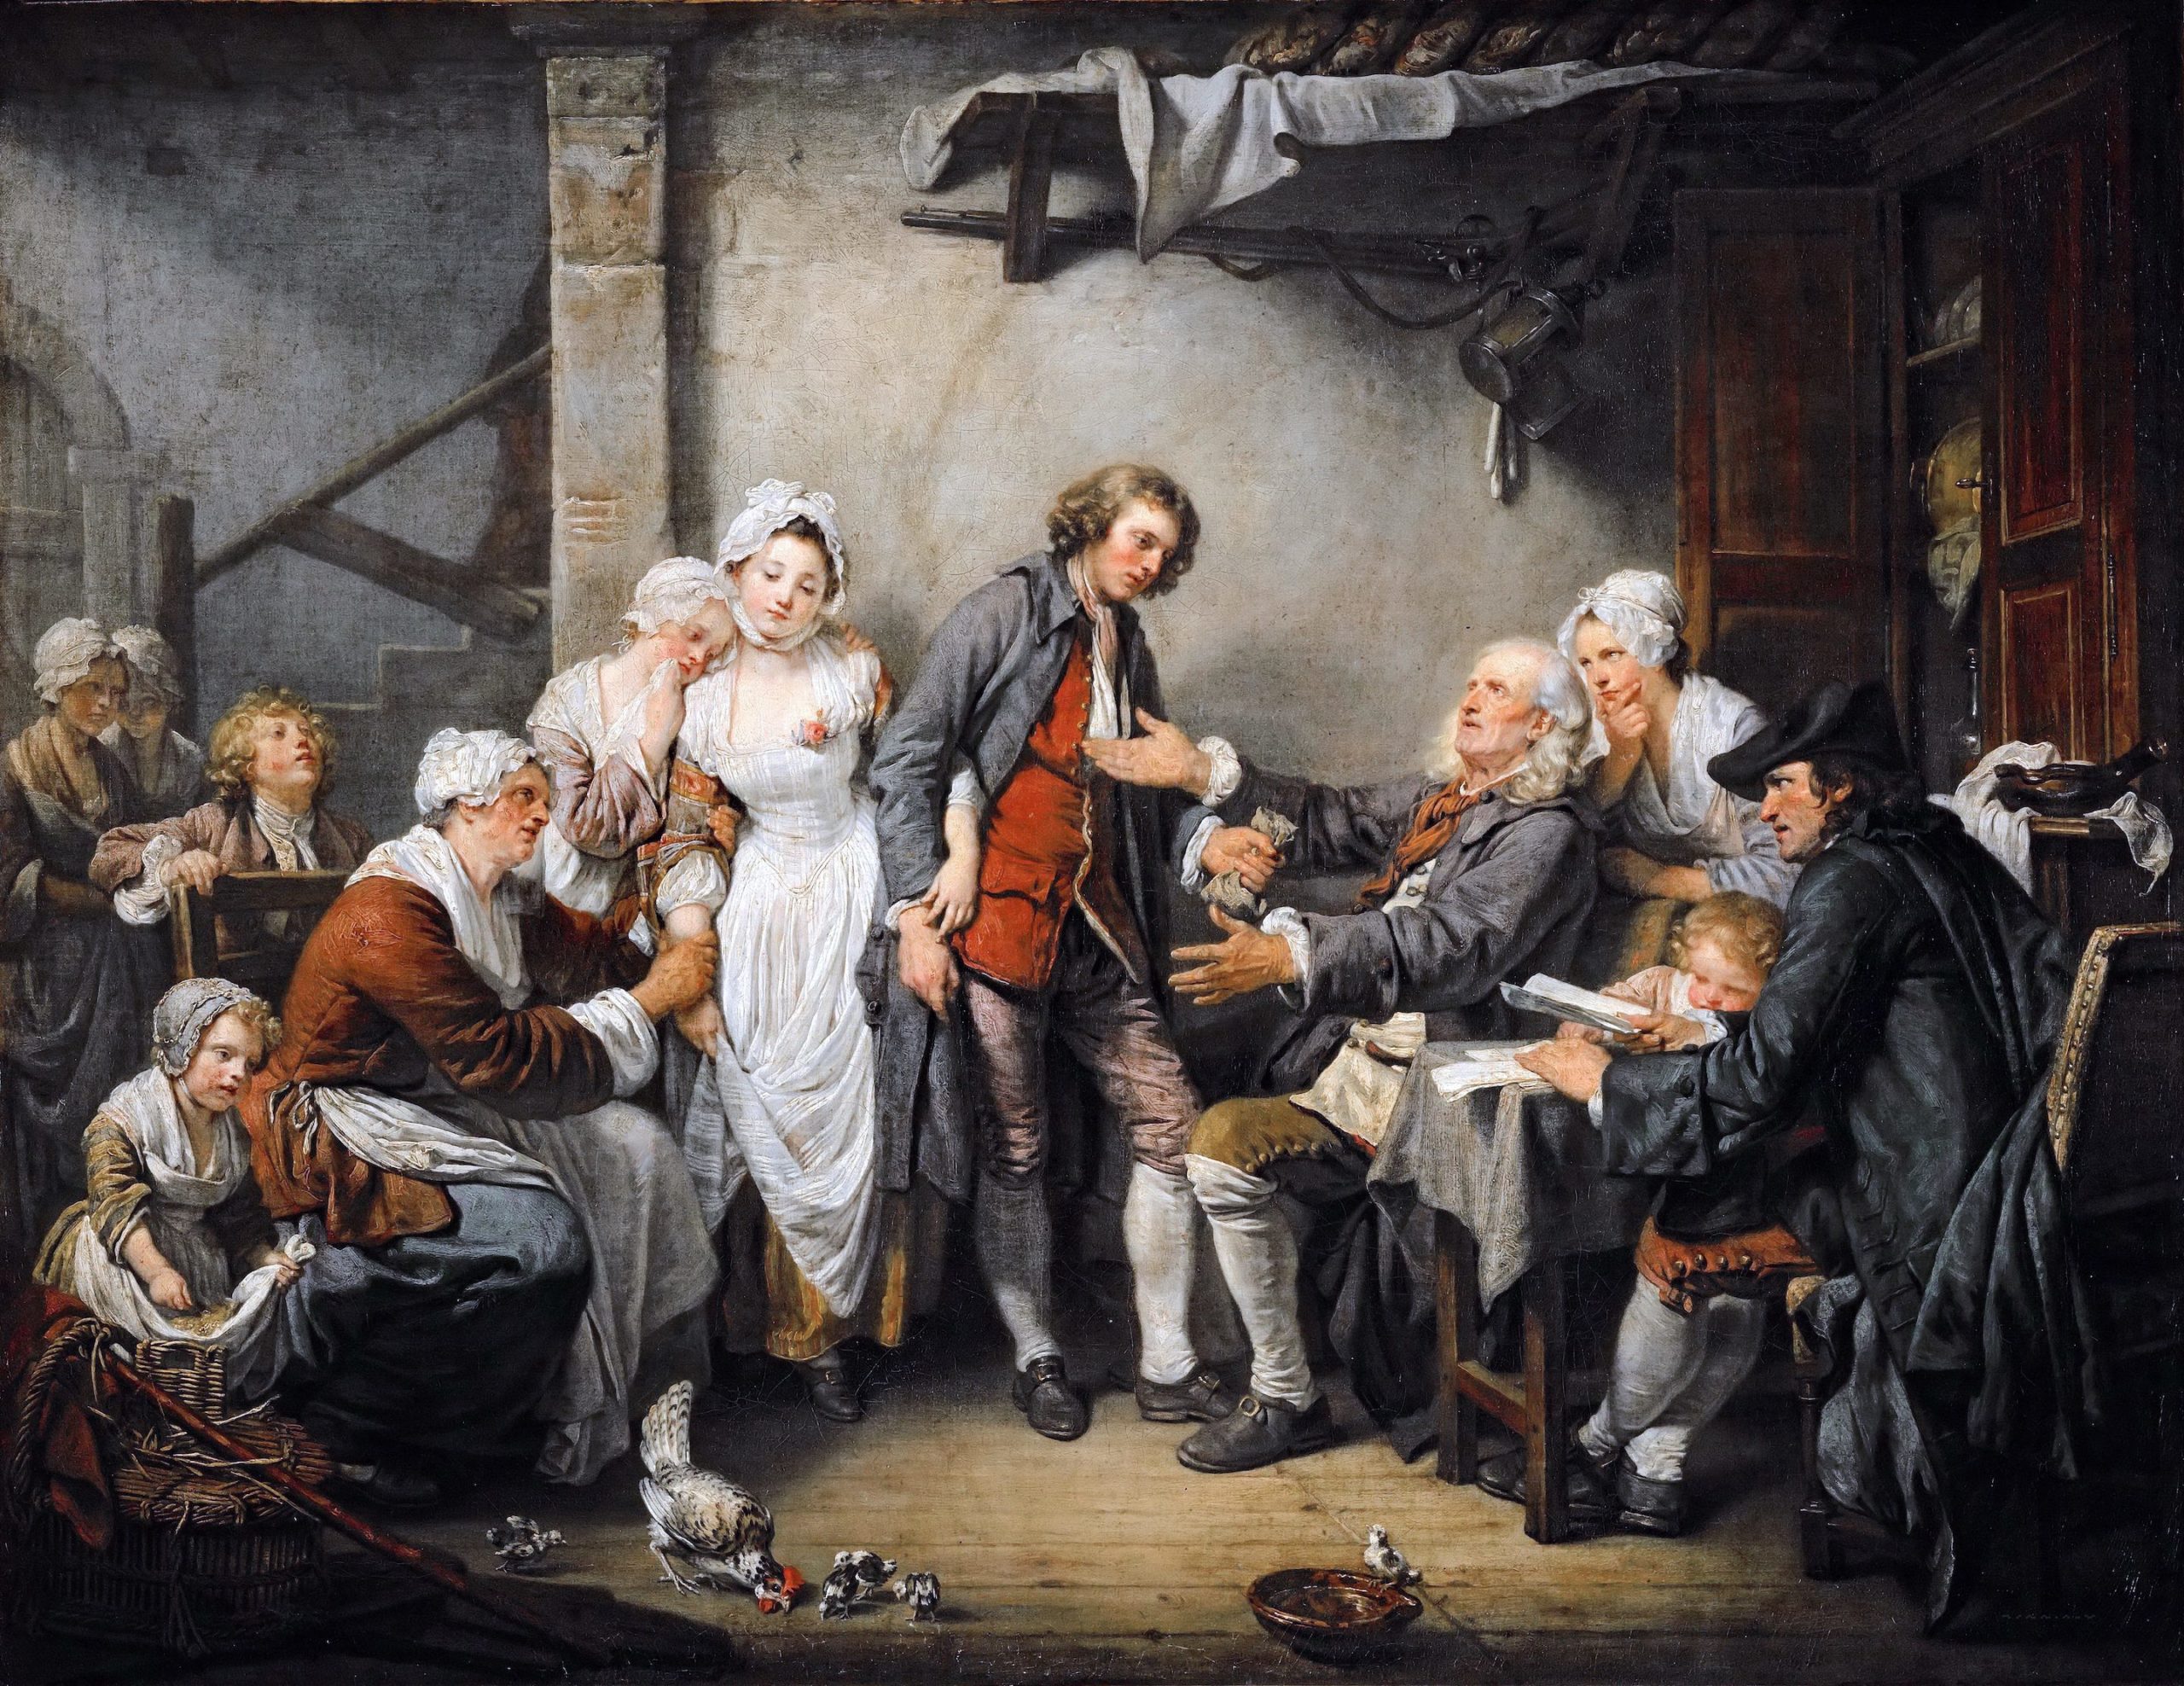 Jean-Baptiste Greuze, The Village Bride